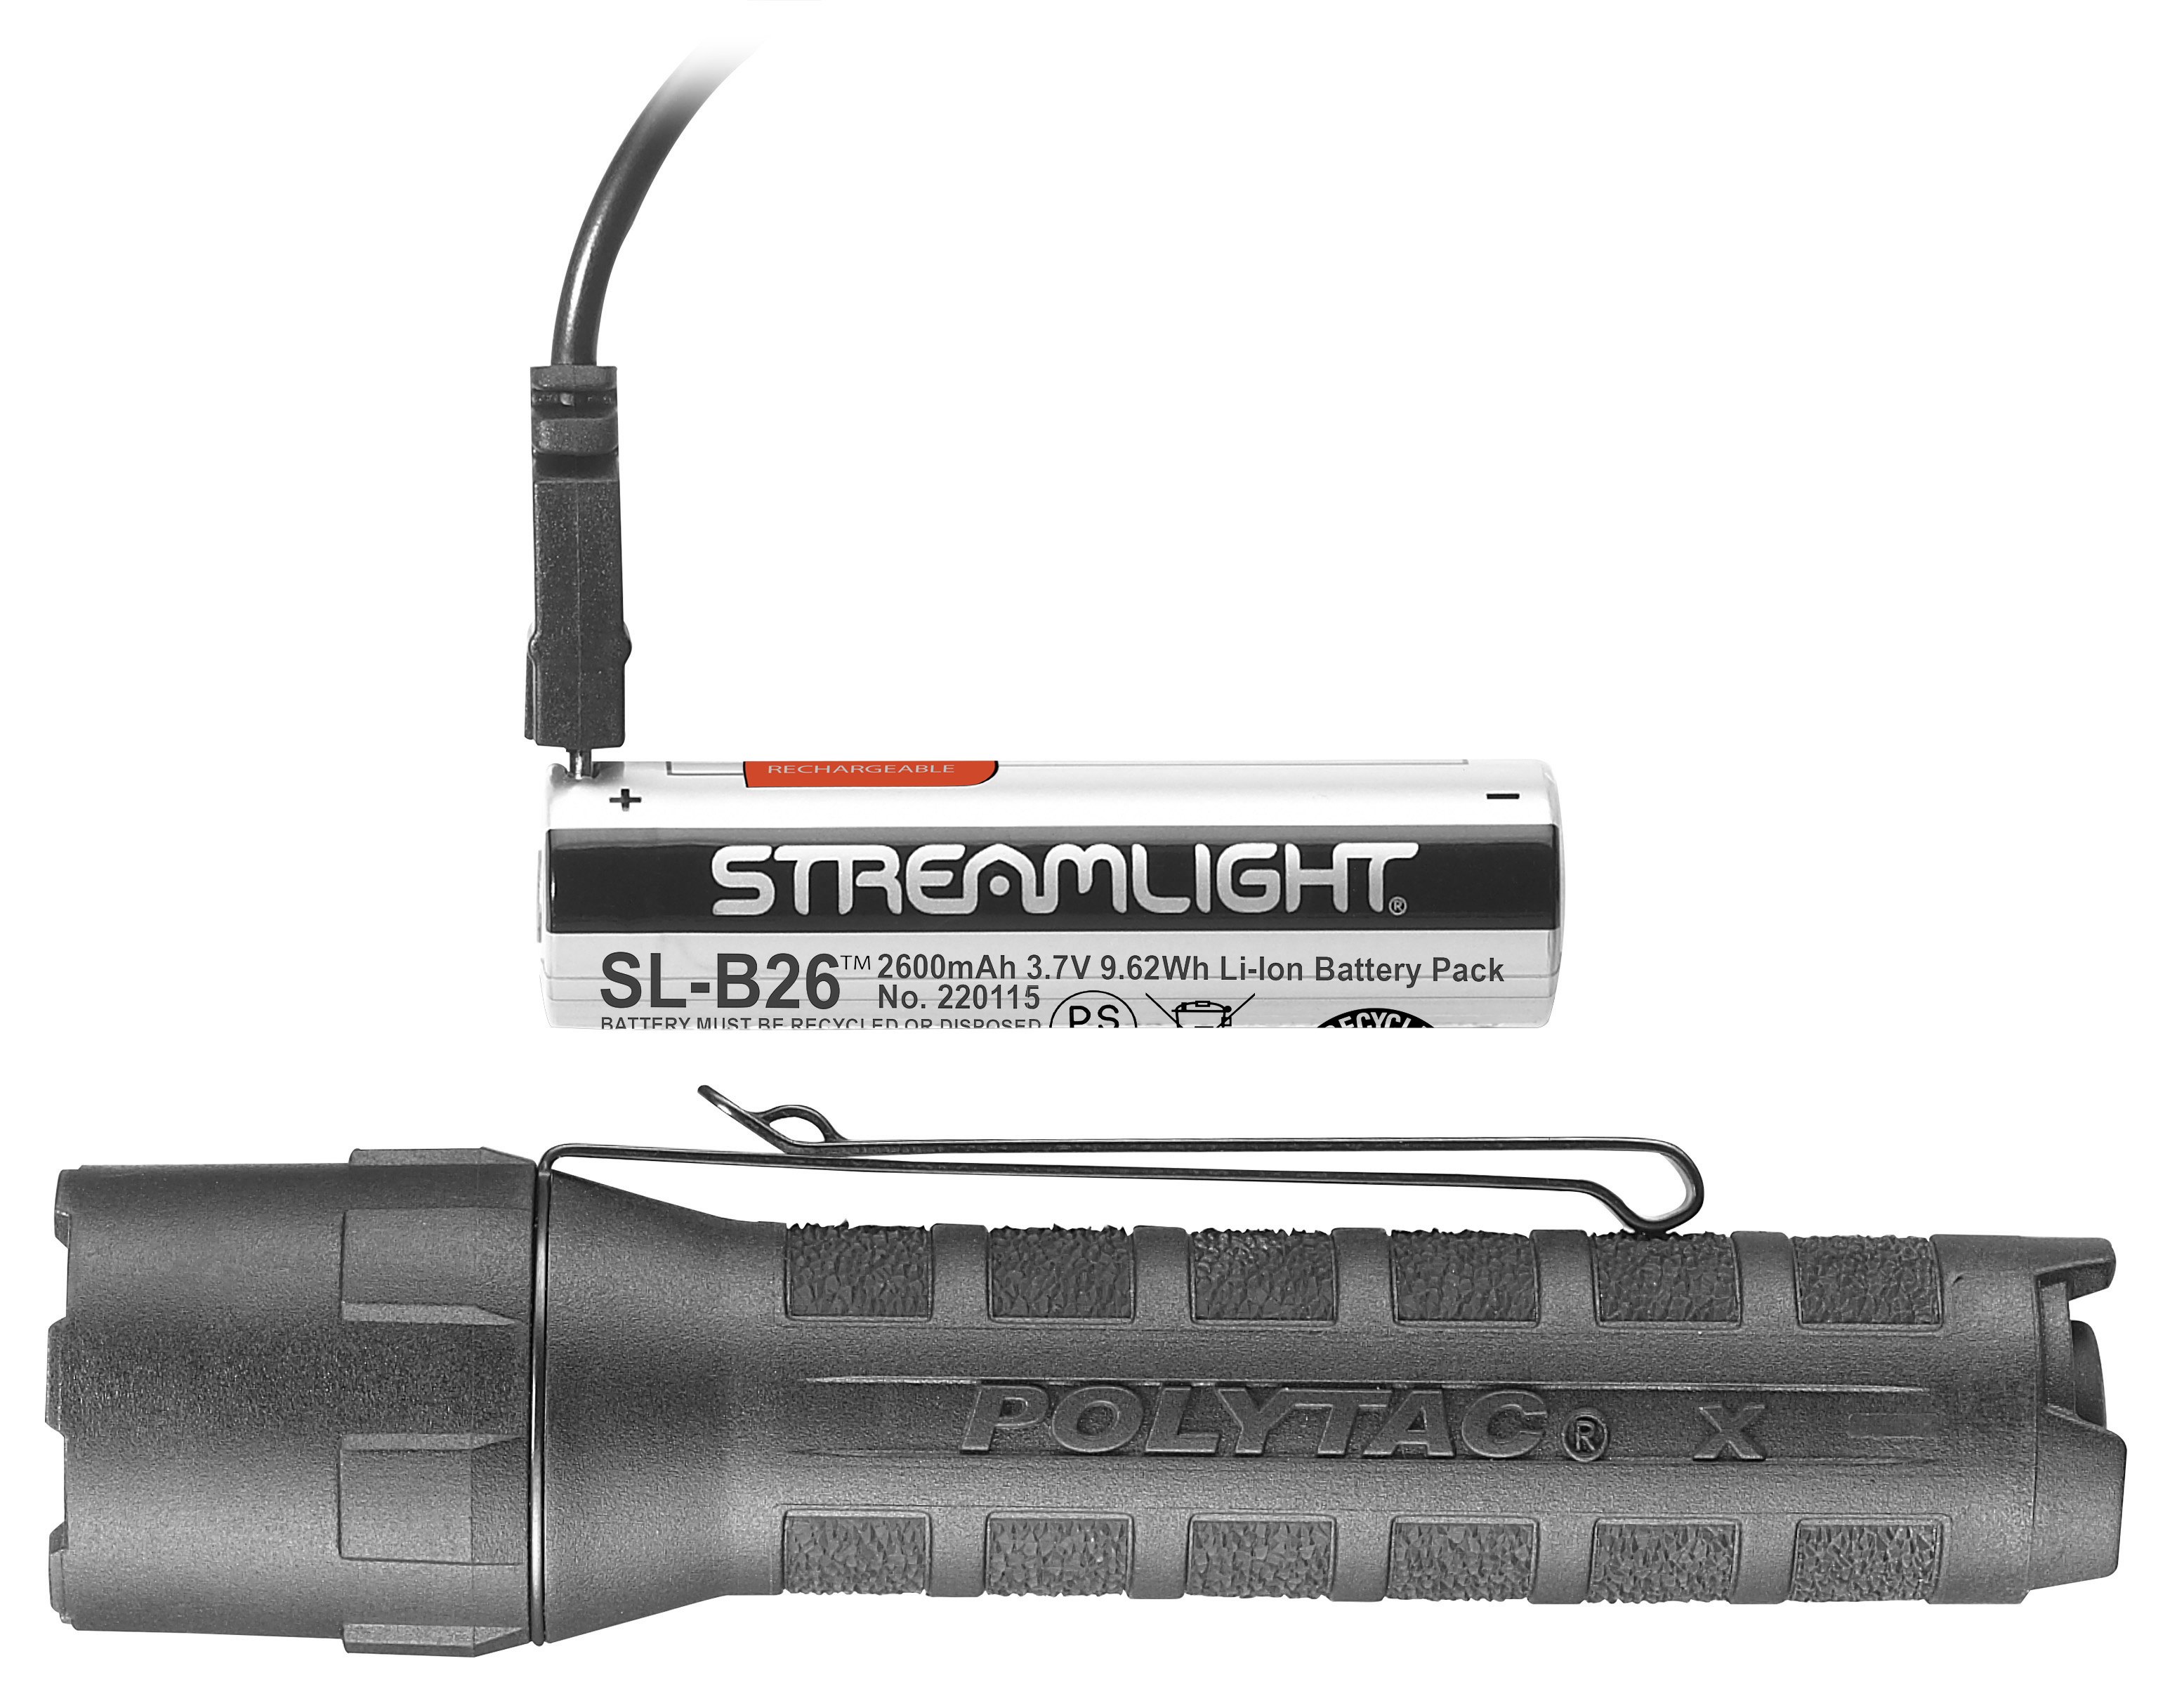 PolyTac® X/PolyTac® X USB Super Bright LED Flashlight | Streamlight